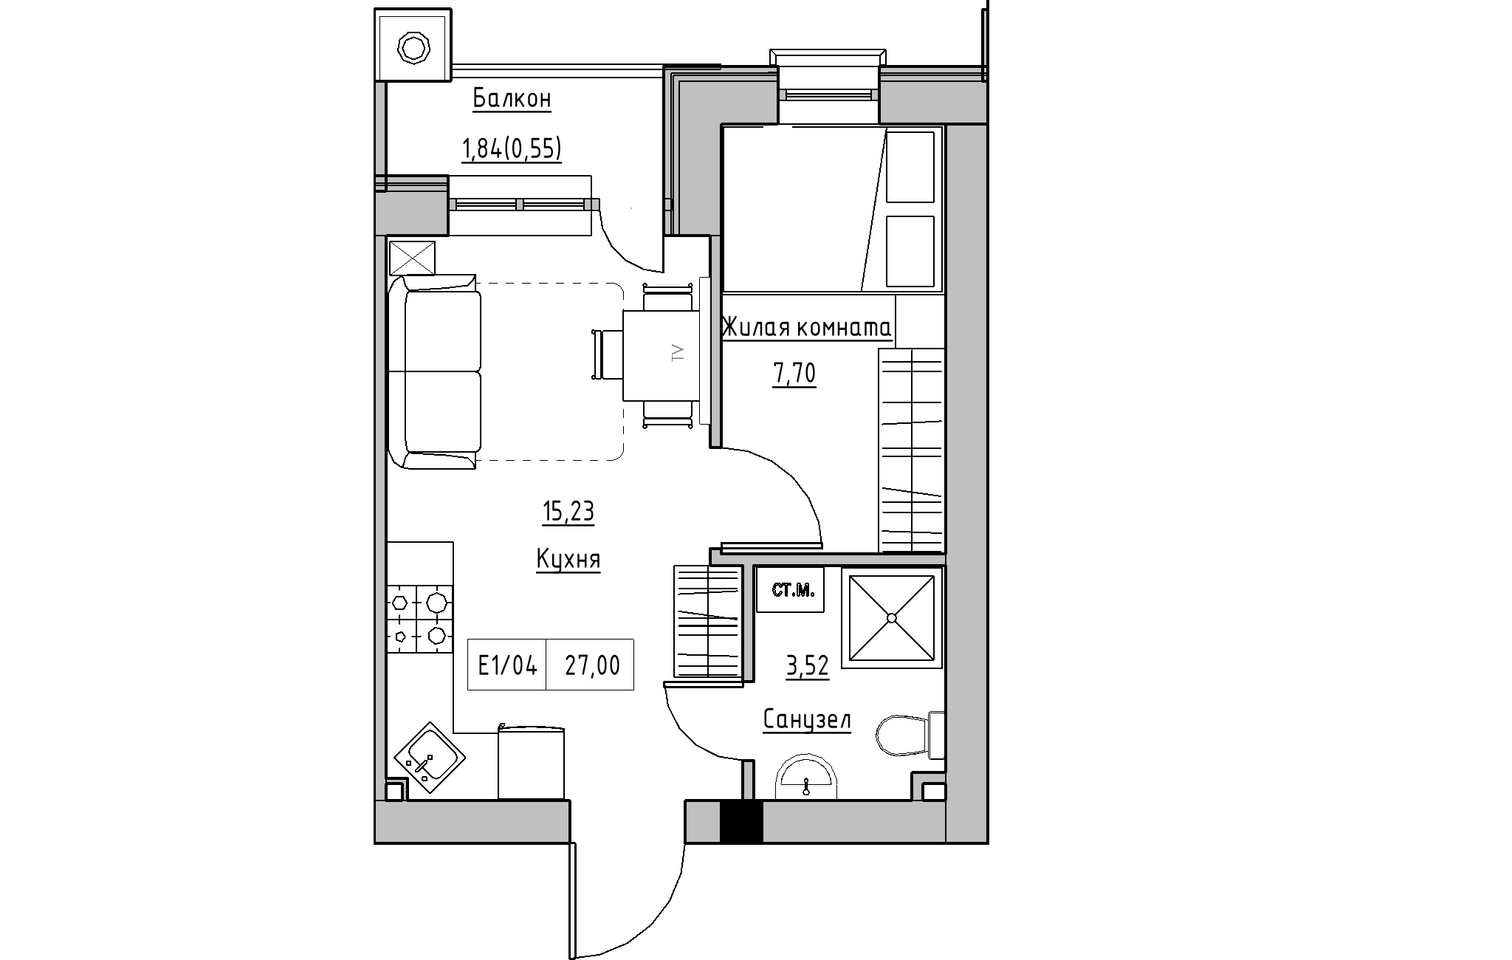 Planning 1-rm flats area 27m2, KS-010-05/0008.